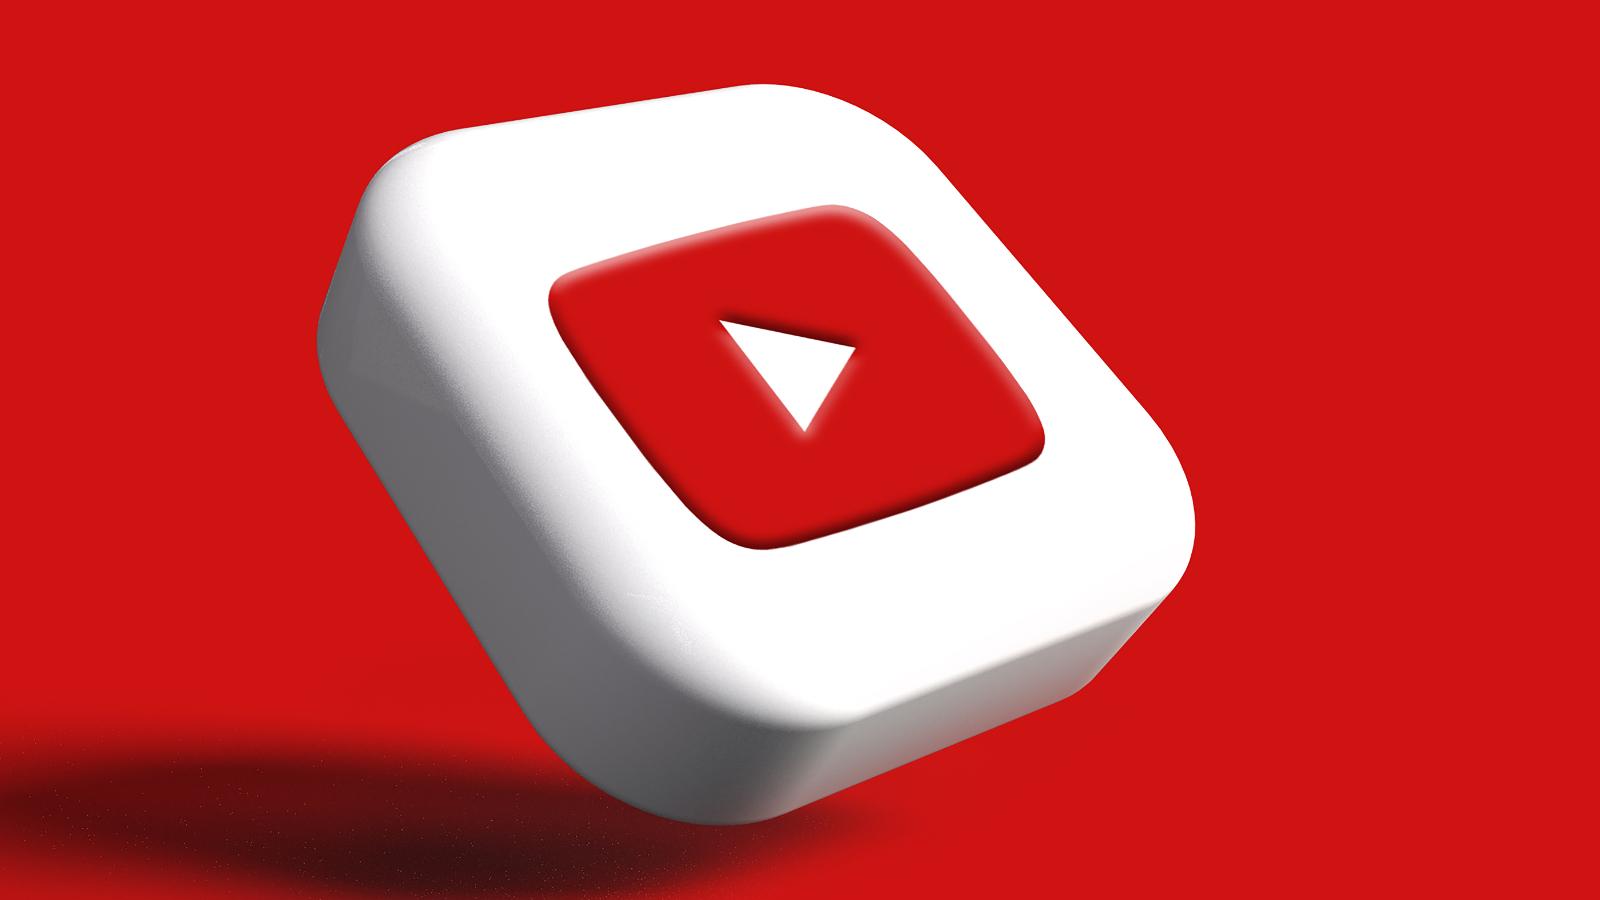 youtube logo on red background